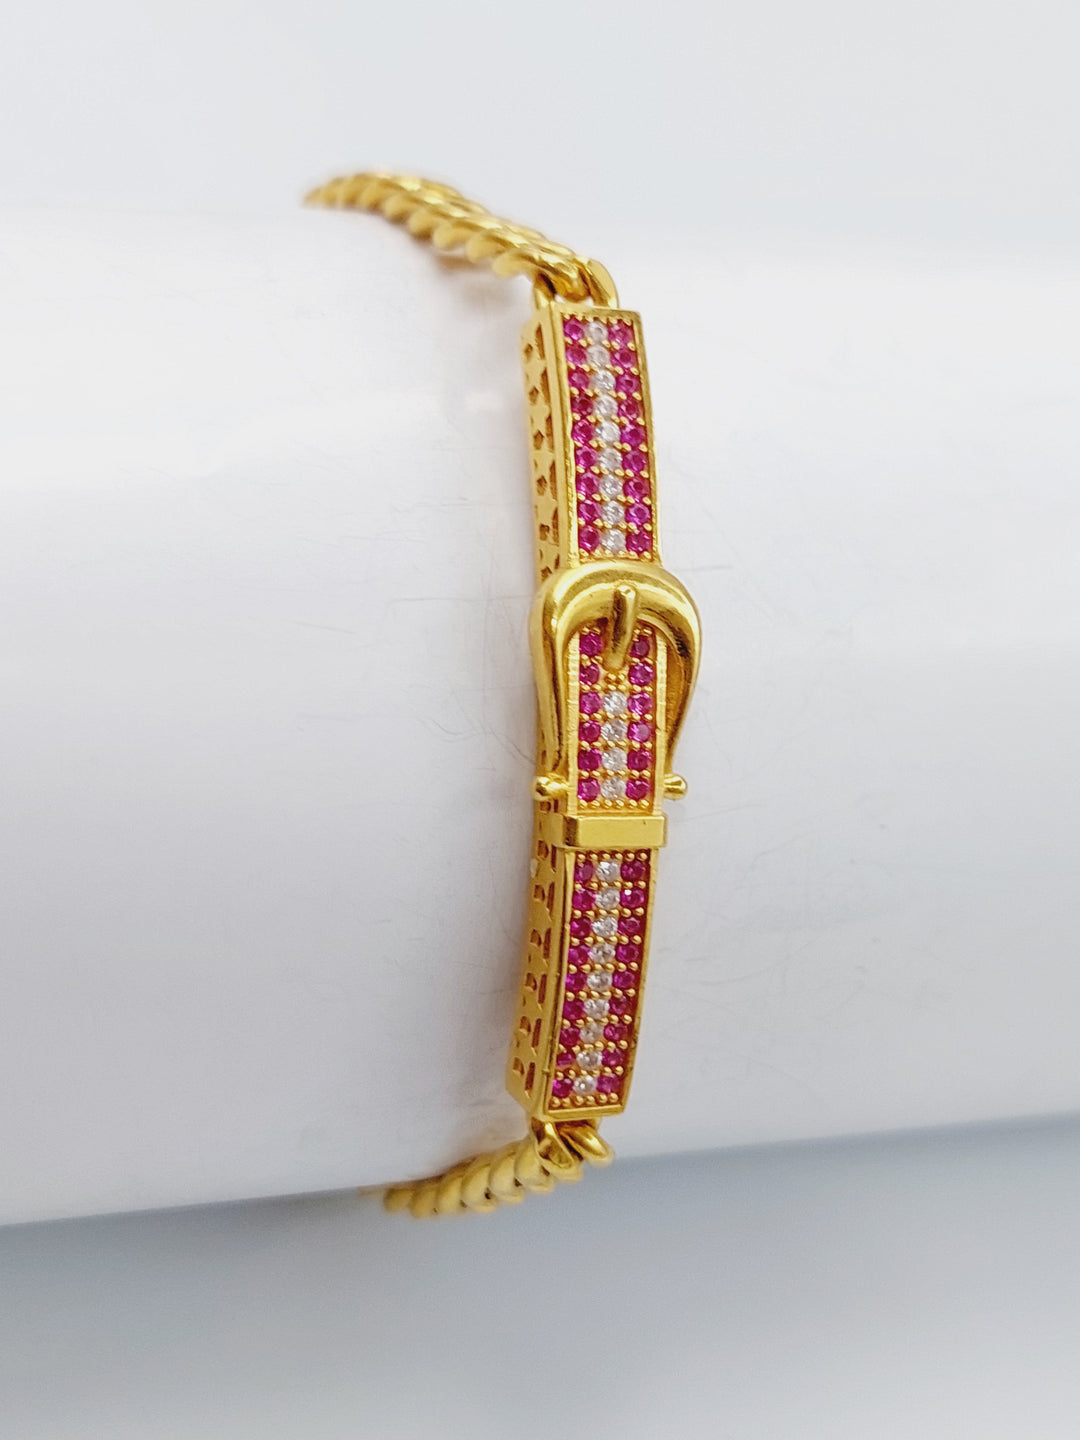 21K Gold Zirconia Bracelet by Saeed Jewelry - Image 1